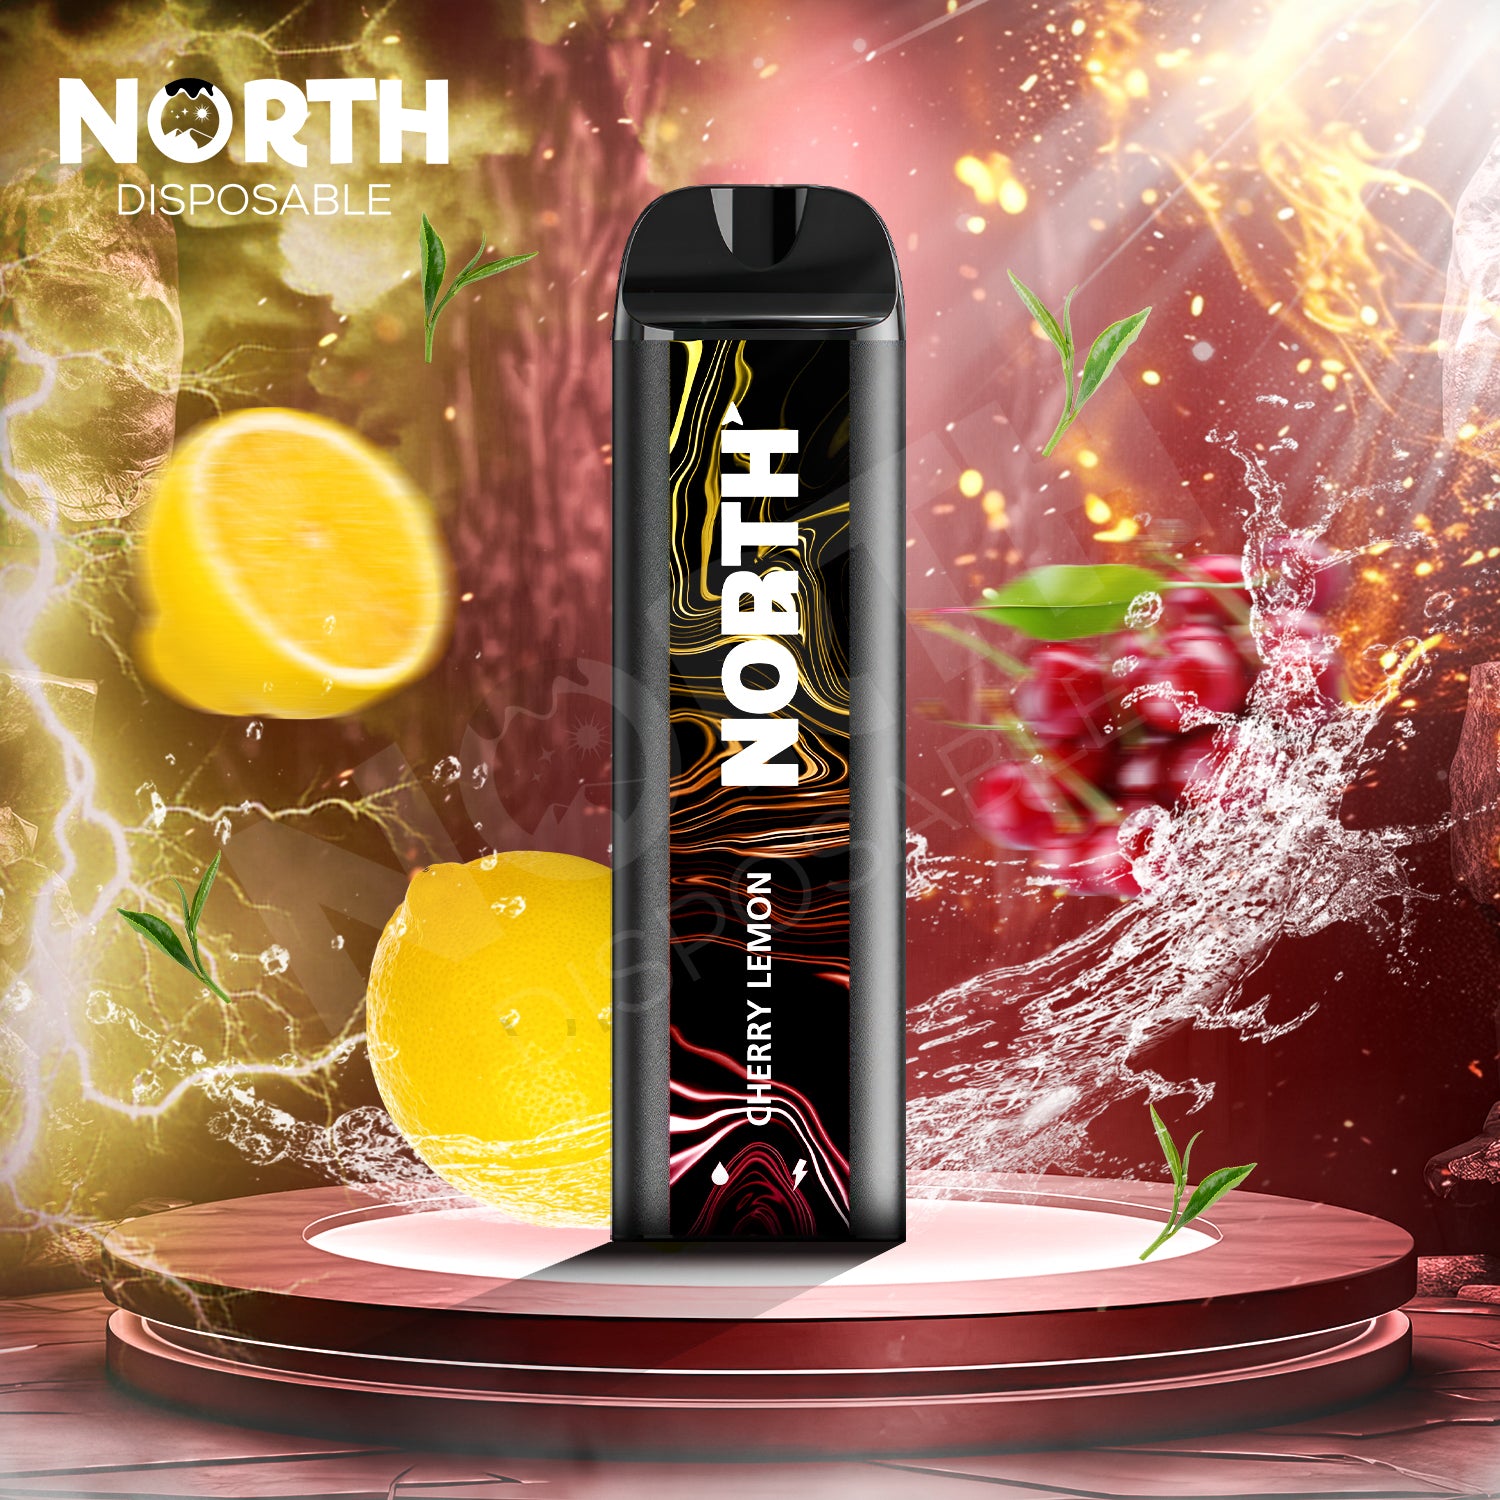 North 5000 Disposable 3% - Cherry Lemon